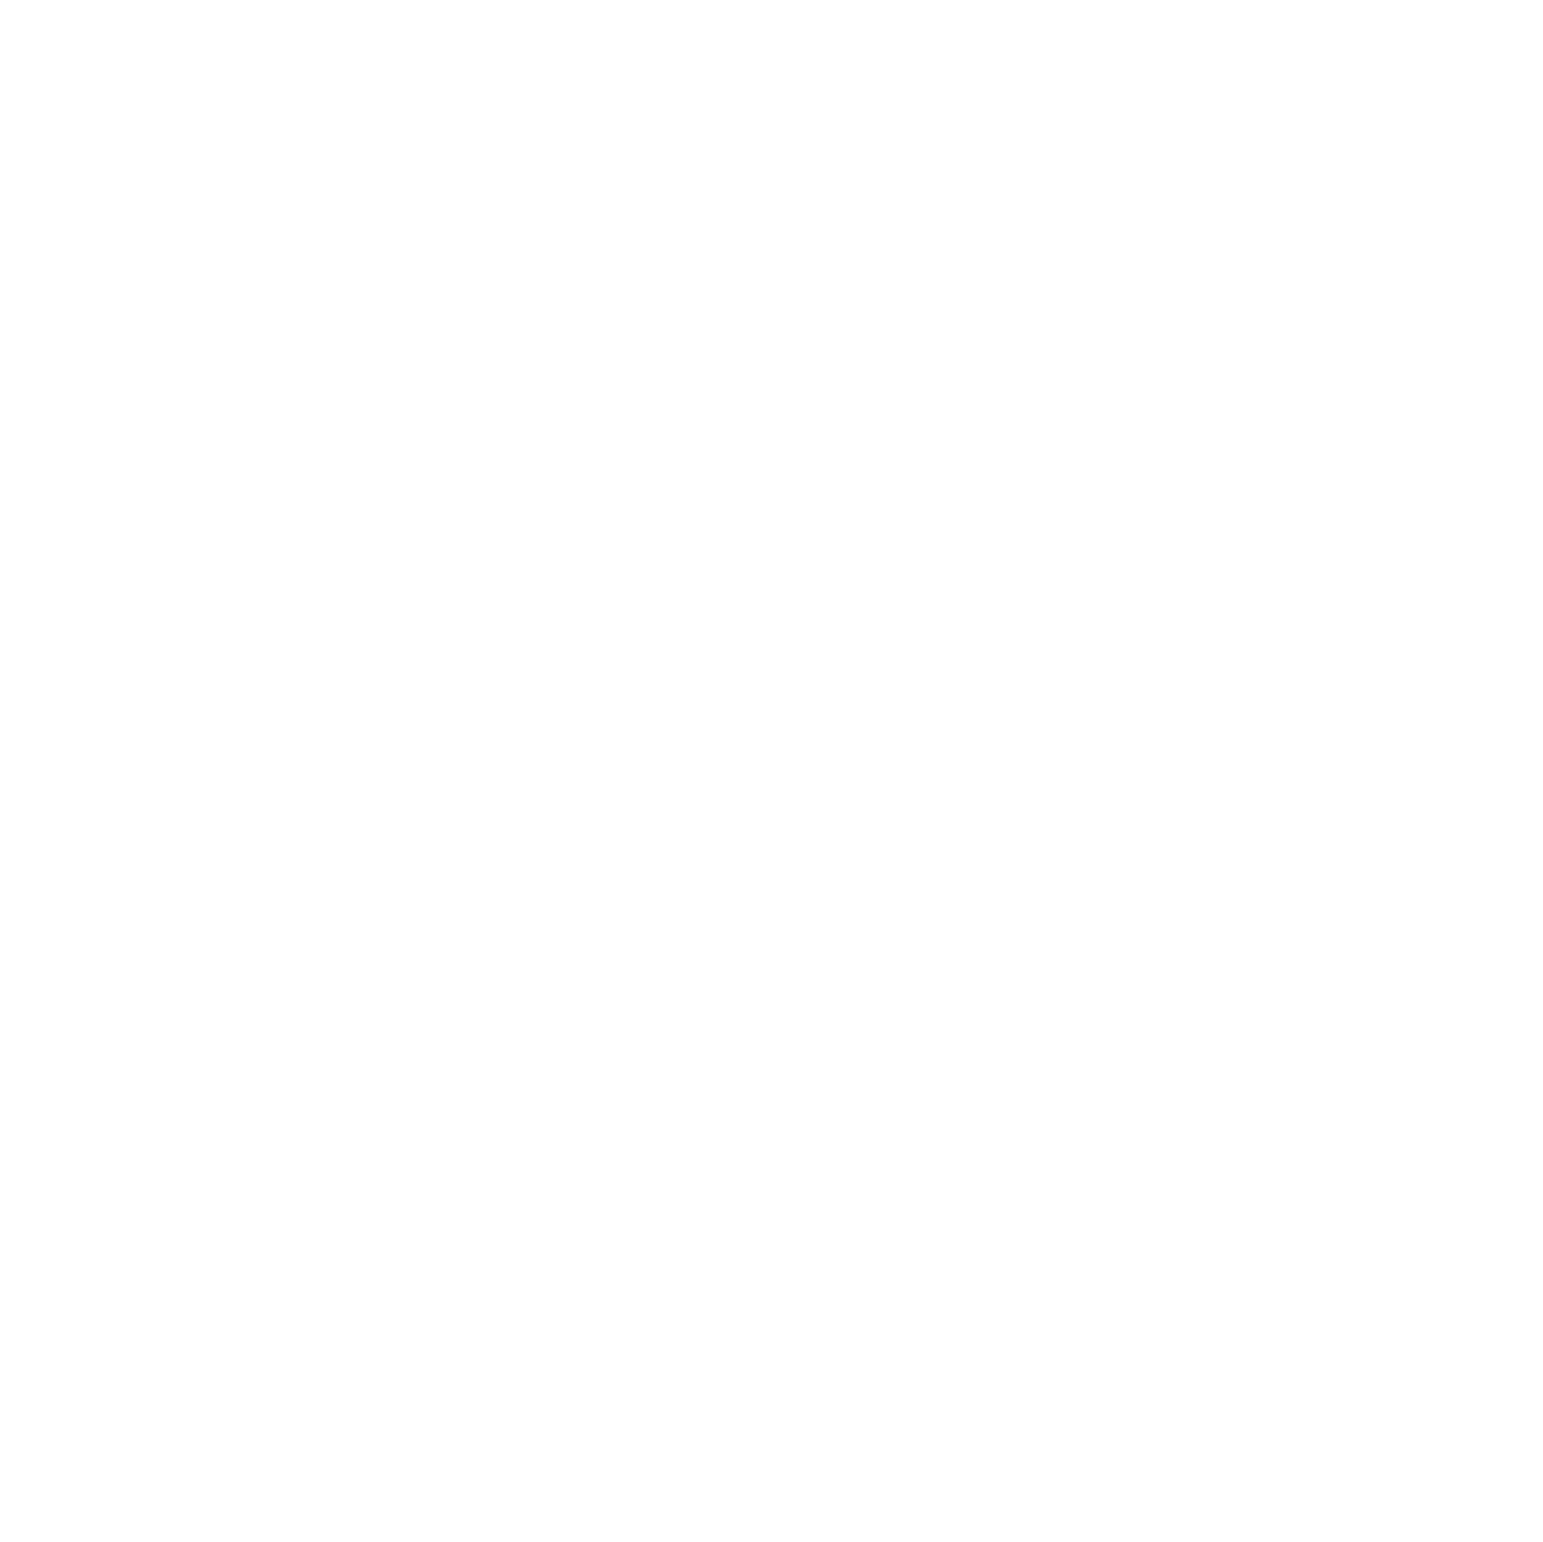 Forian logo for dark backgrounds (transparent PNG)